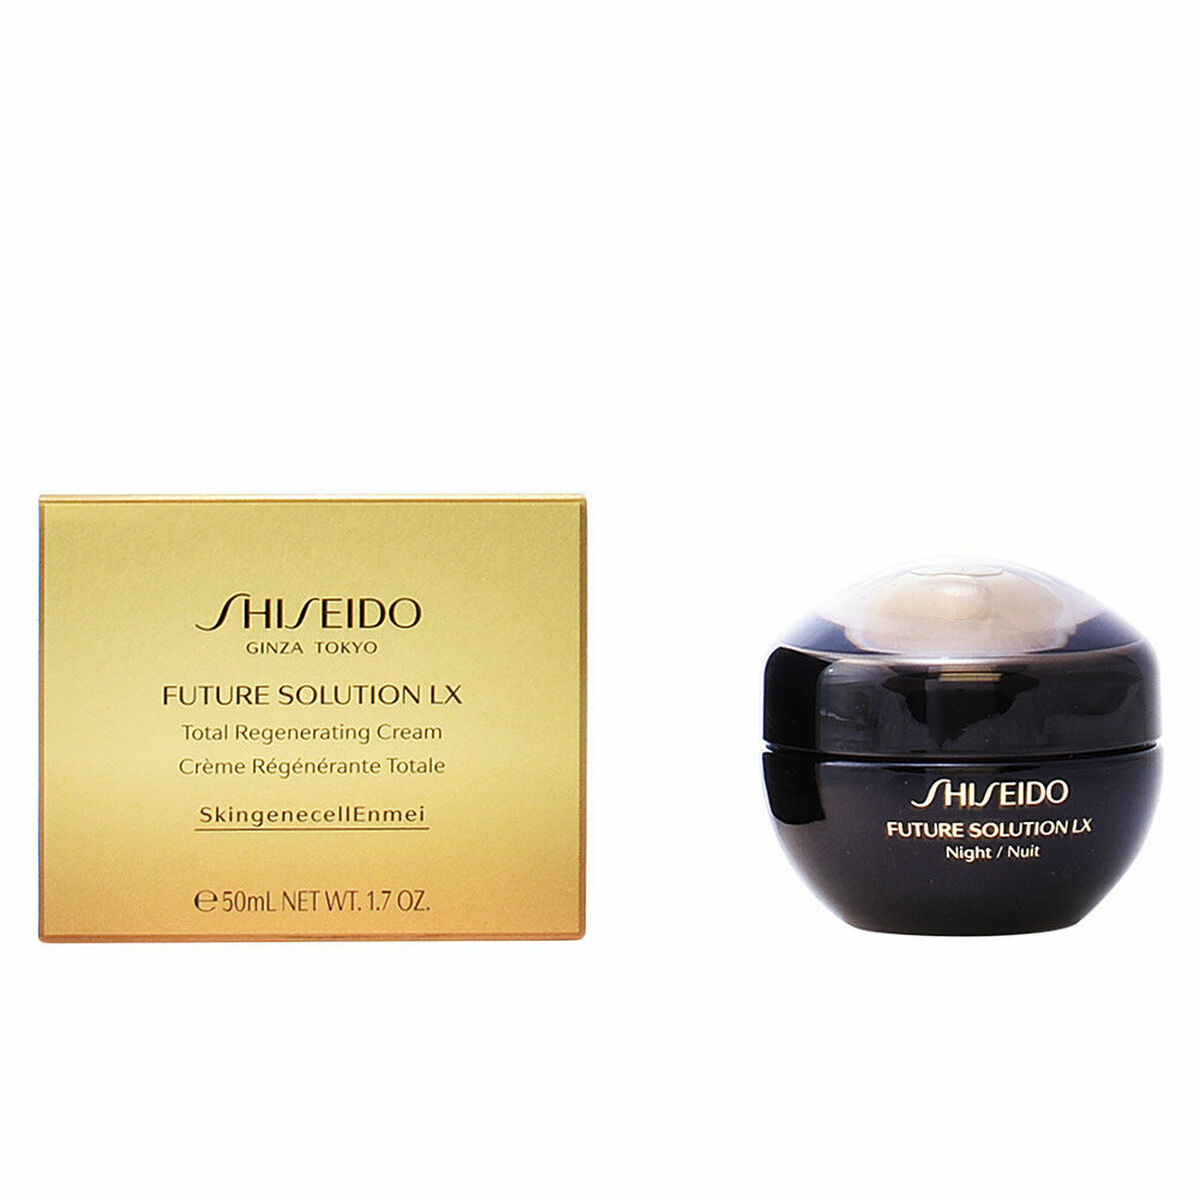 Shiseido solution lx